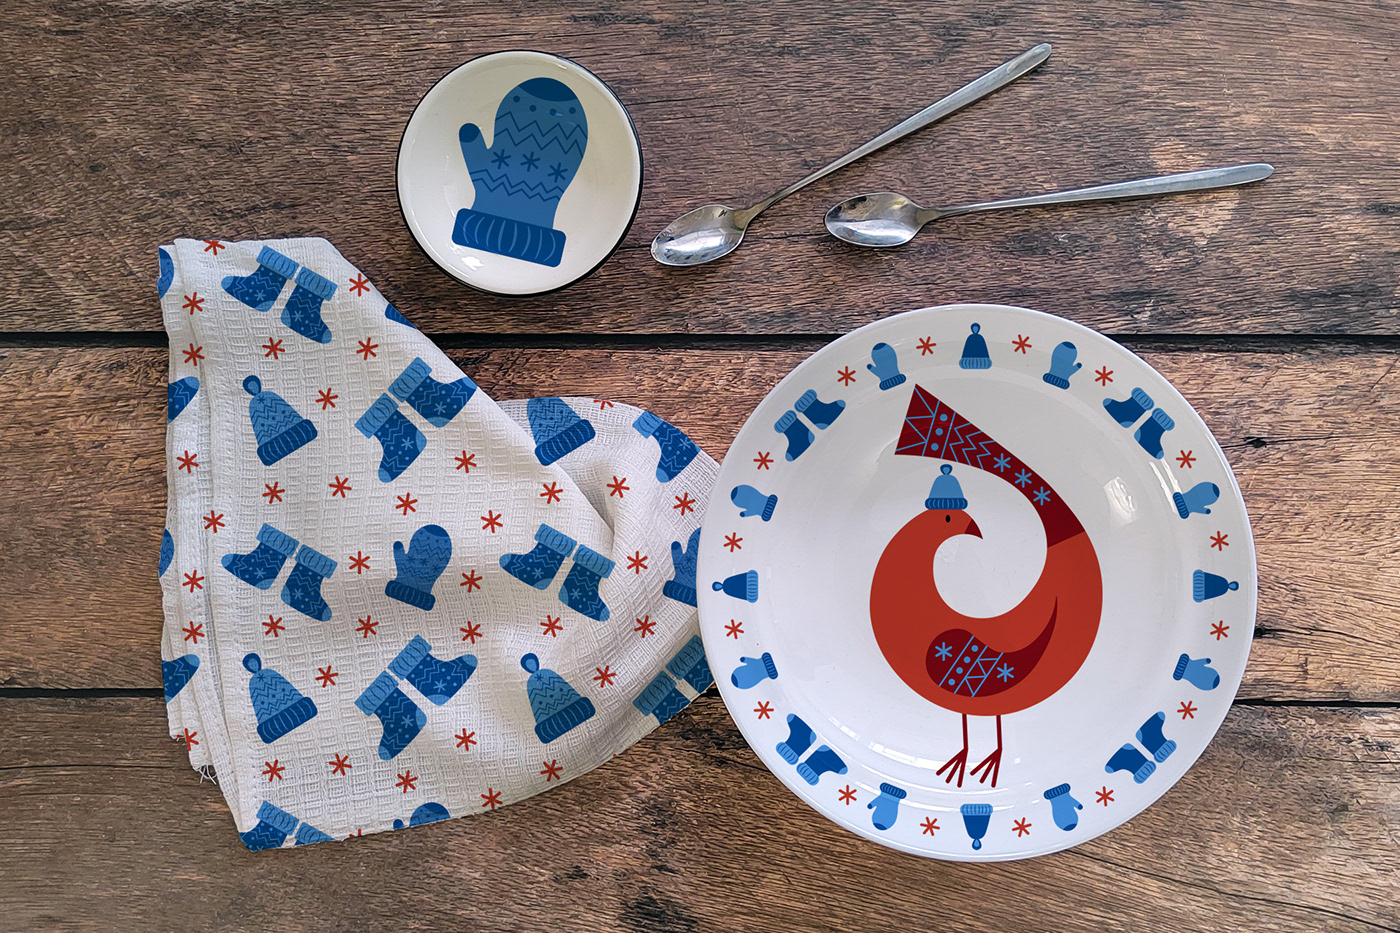 birds Birds on plates ceramic pattern plates графика иллюстрация паттерн посуда птицы